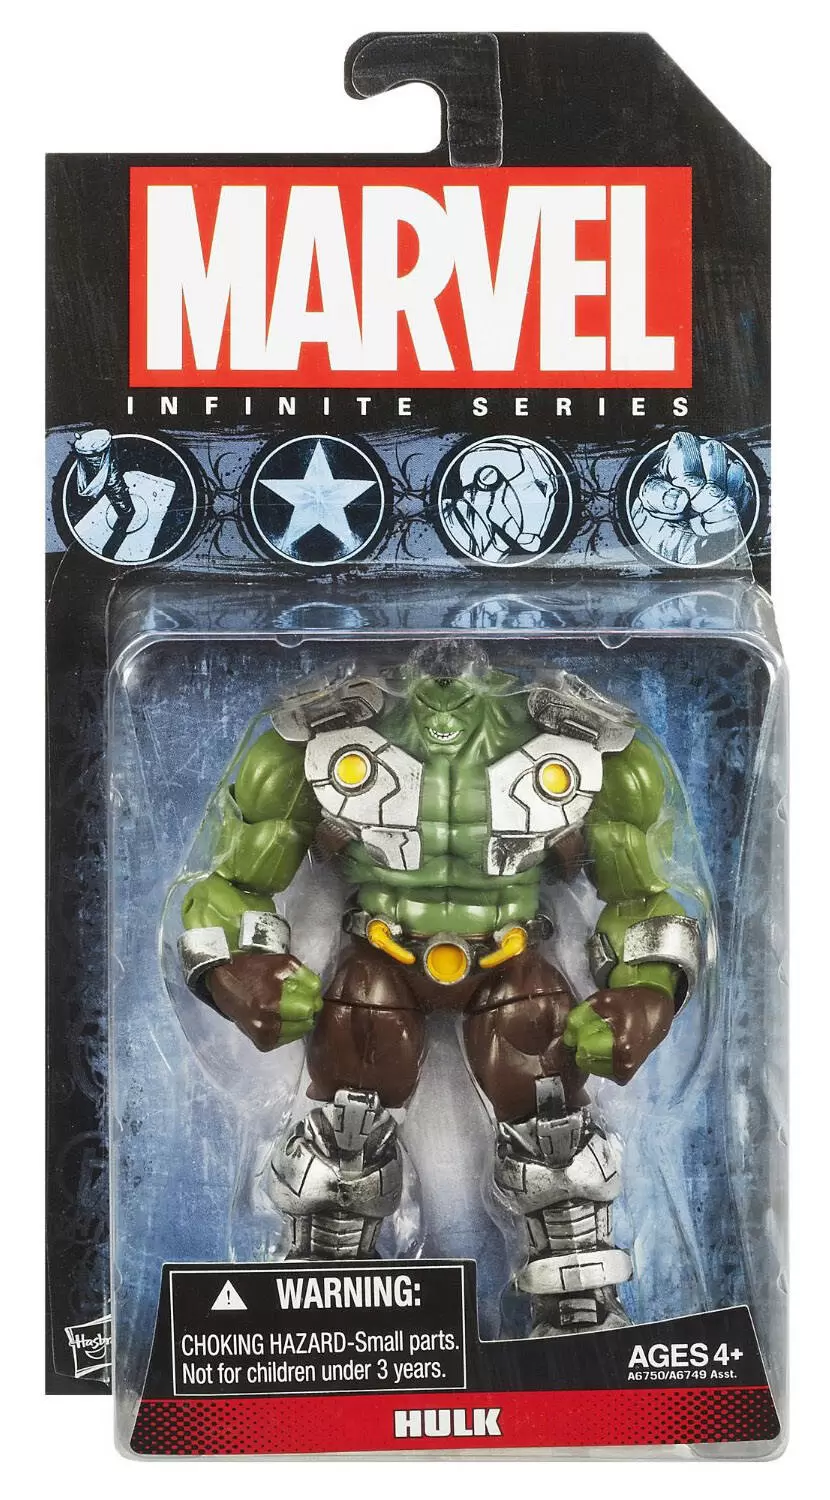 Marvel Infinite Series - Hulk